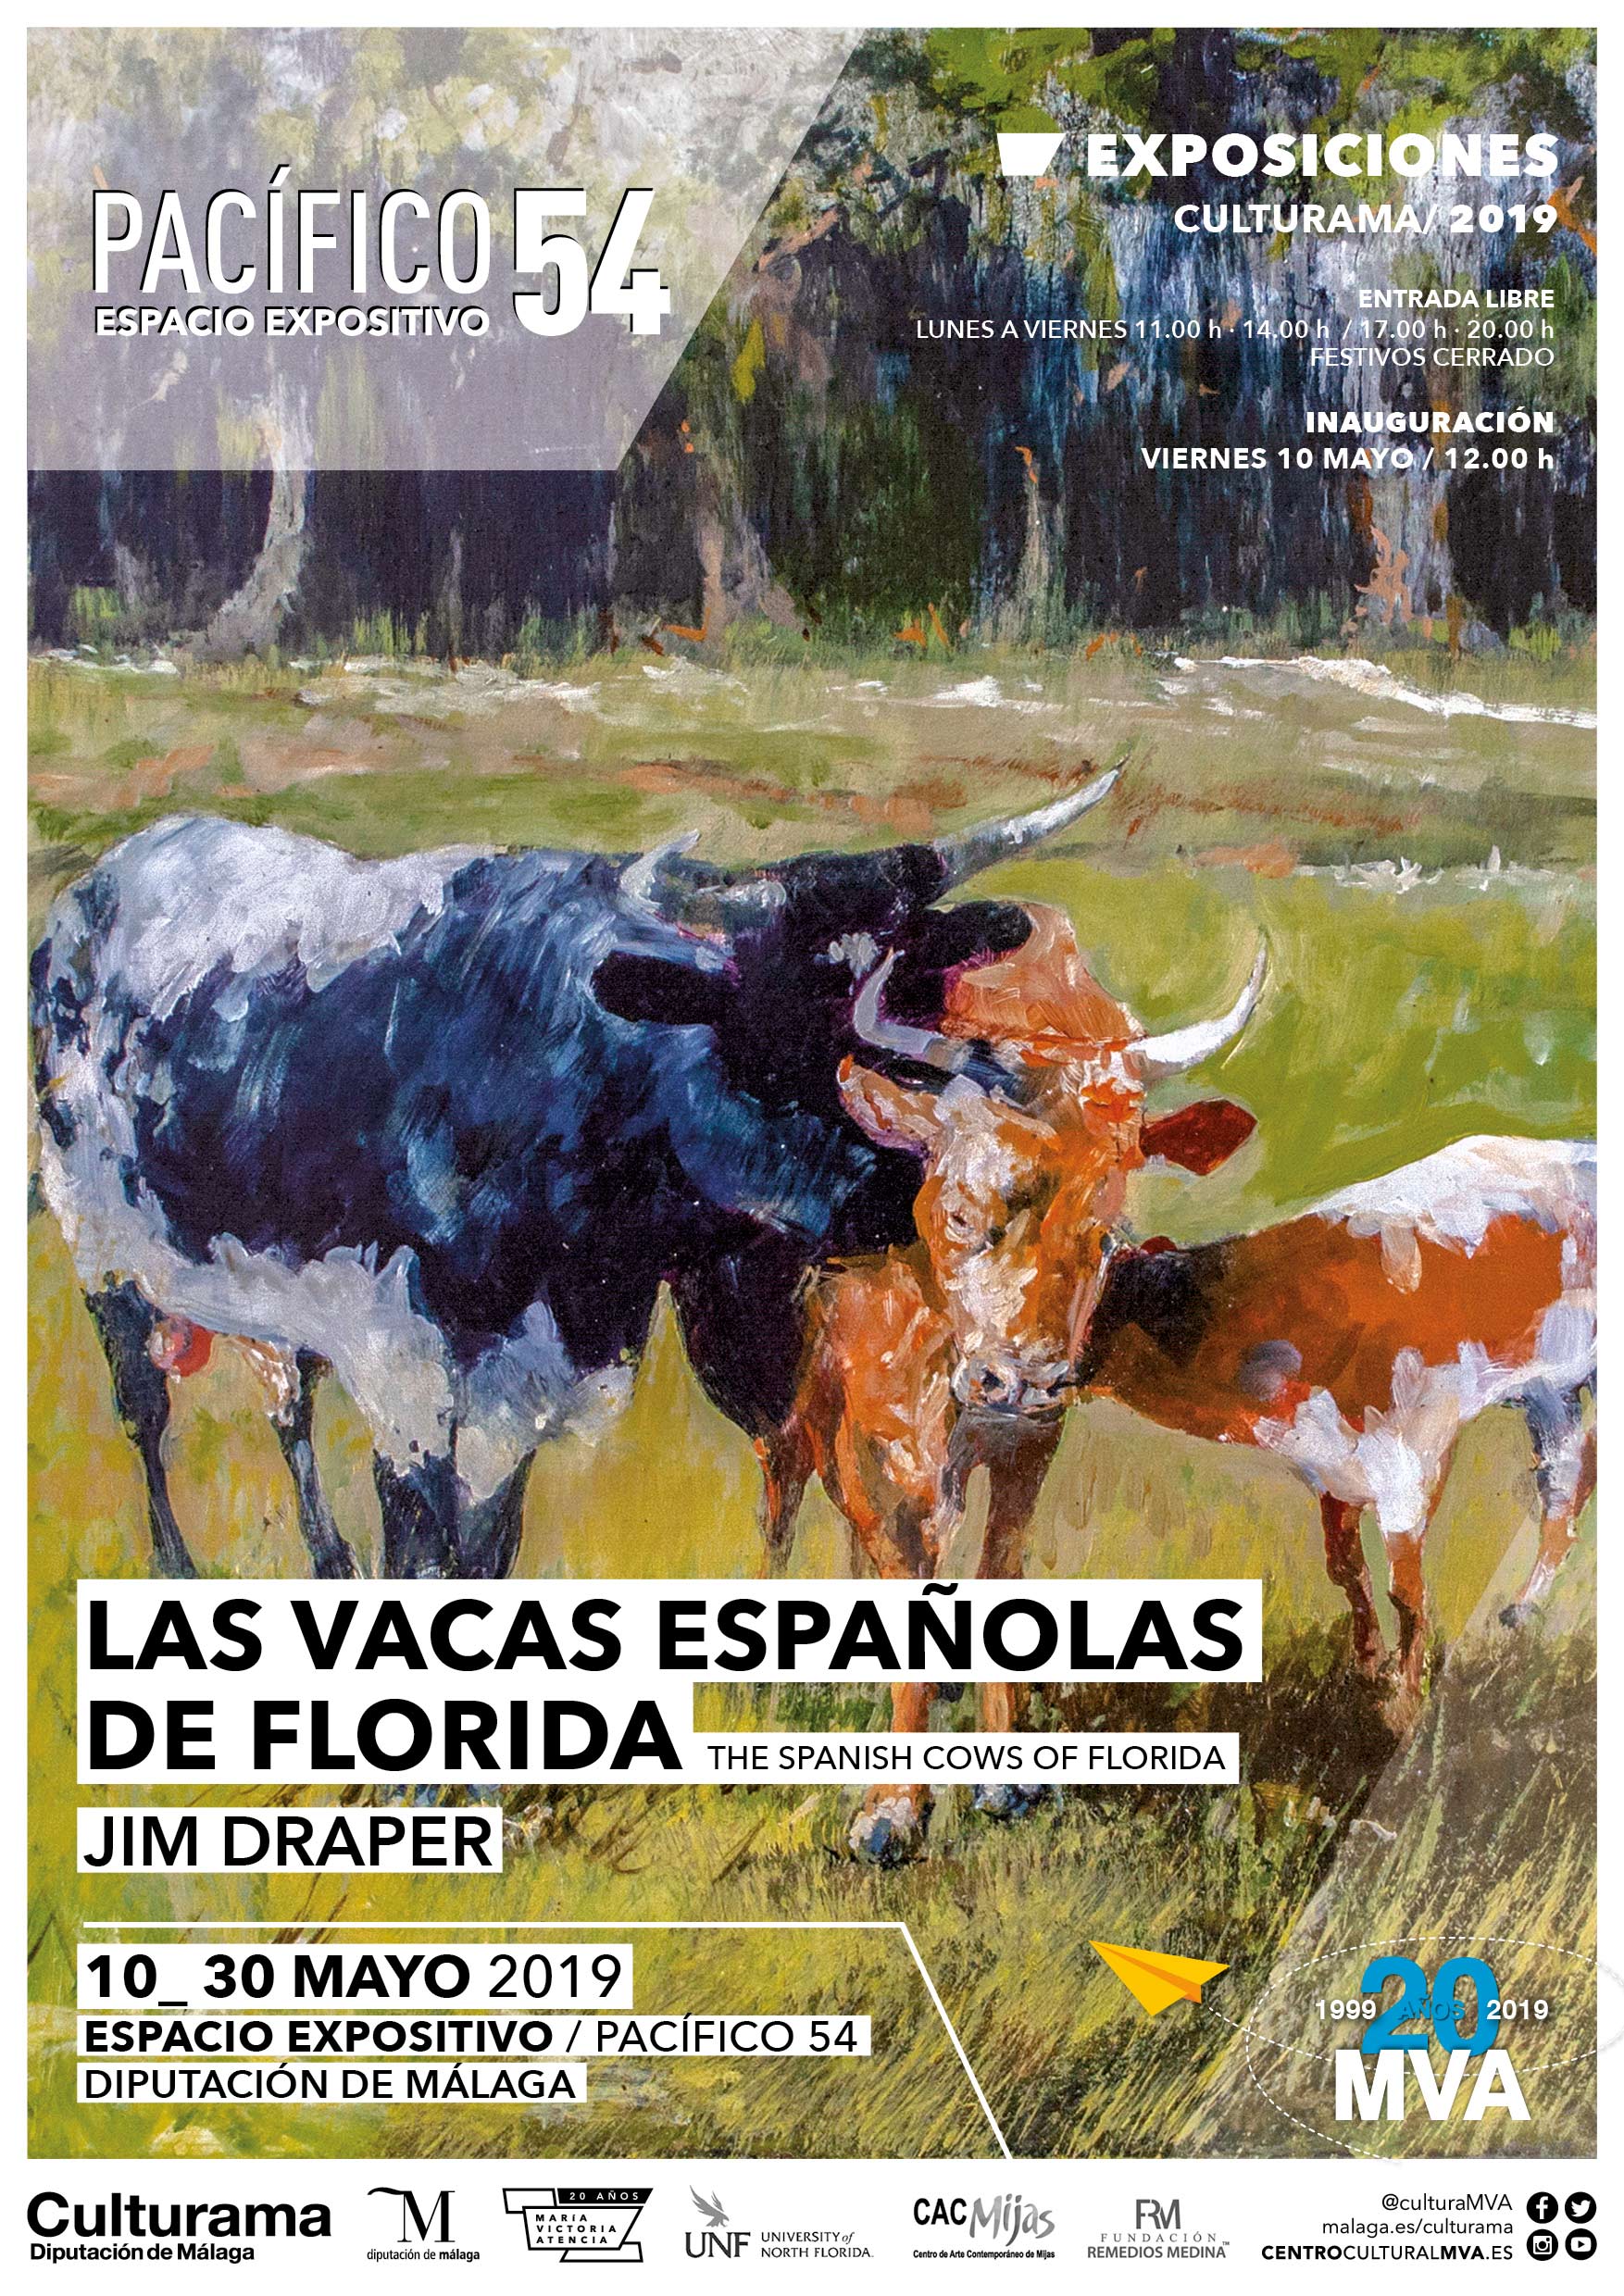 JIM DRAPER. LAS VACAS ESPAÑOLAS DE FLORIDA